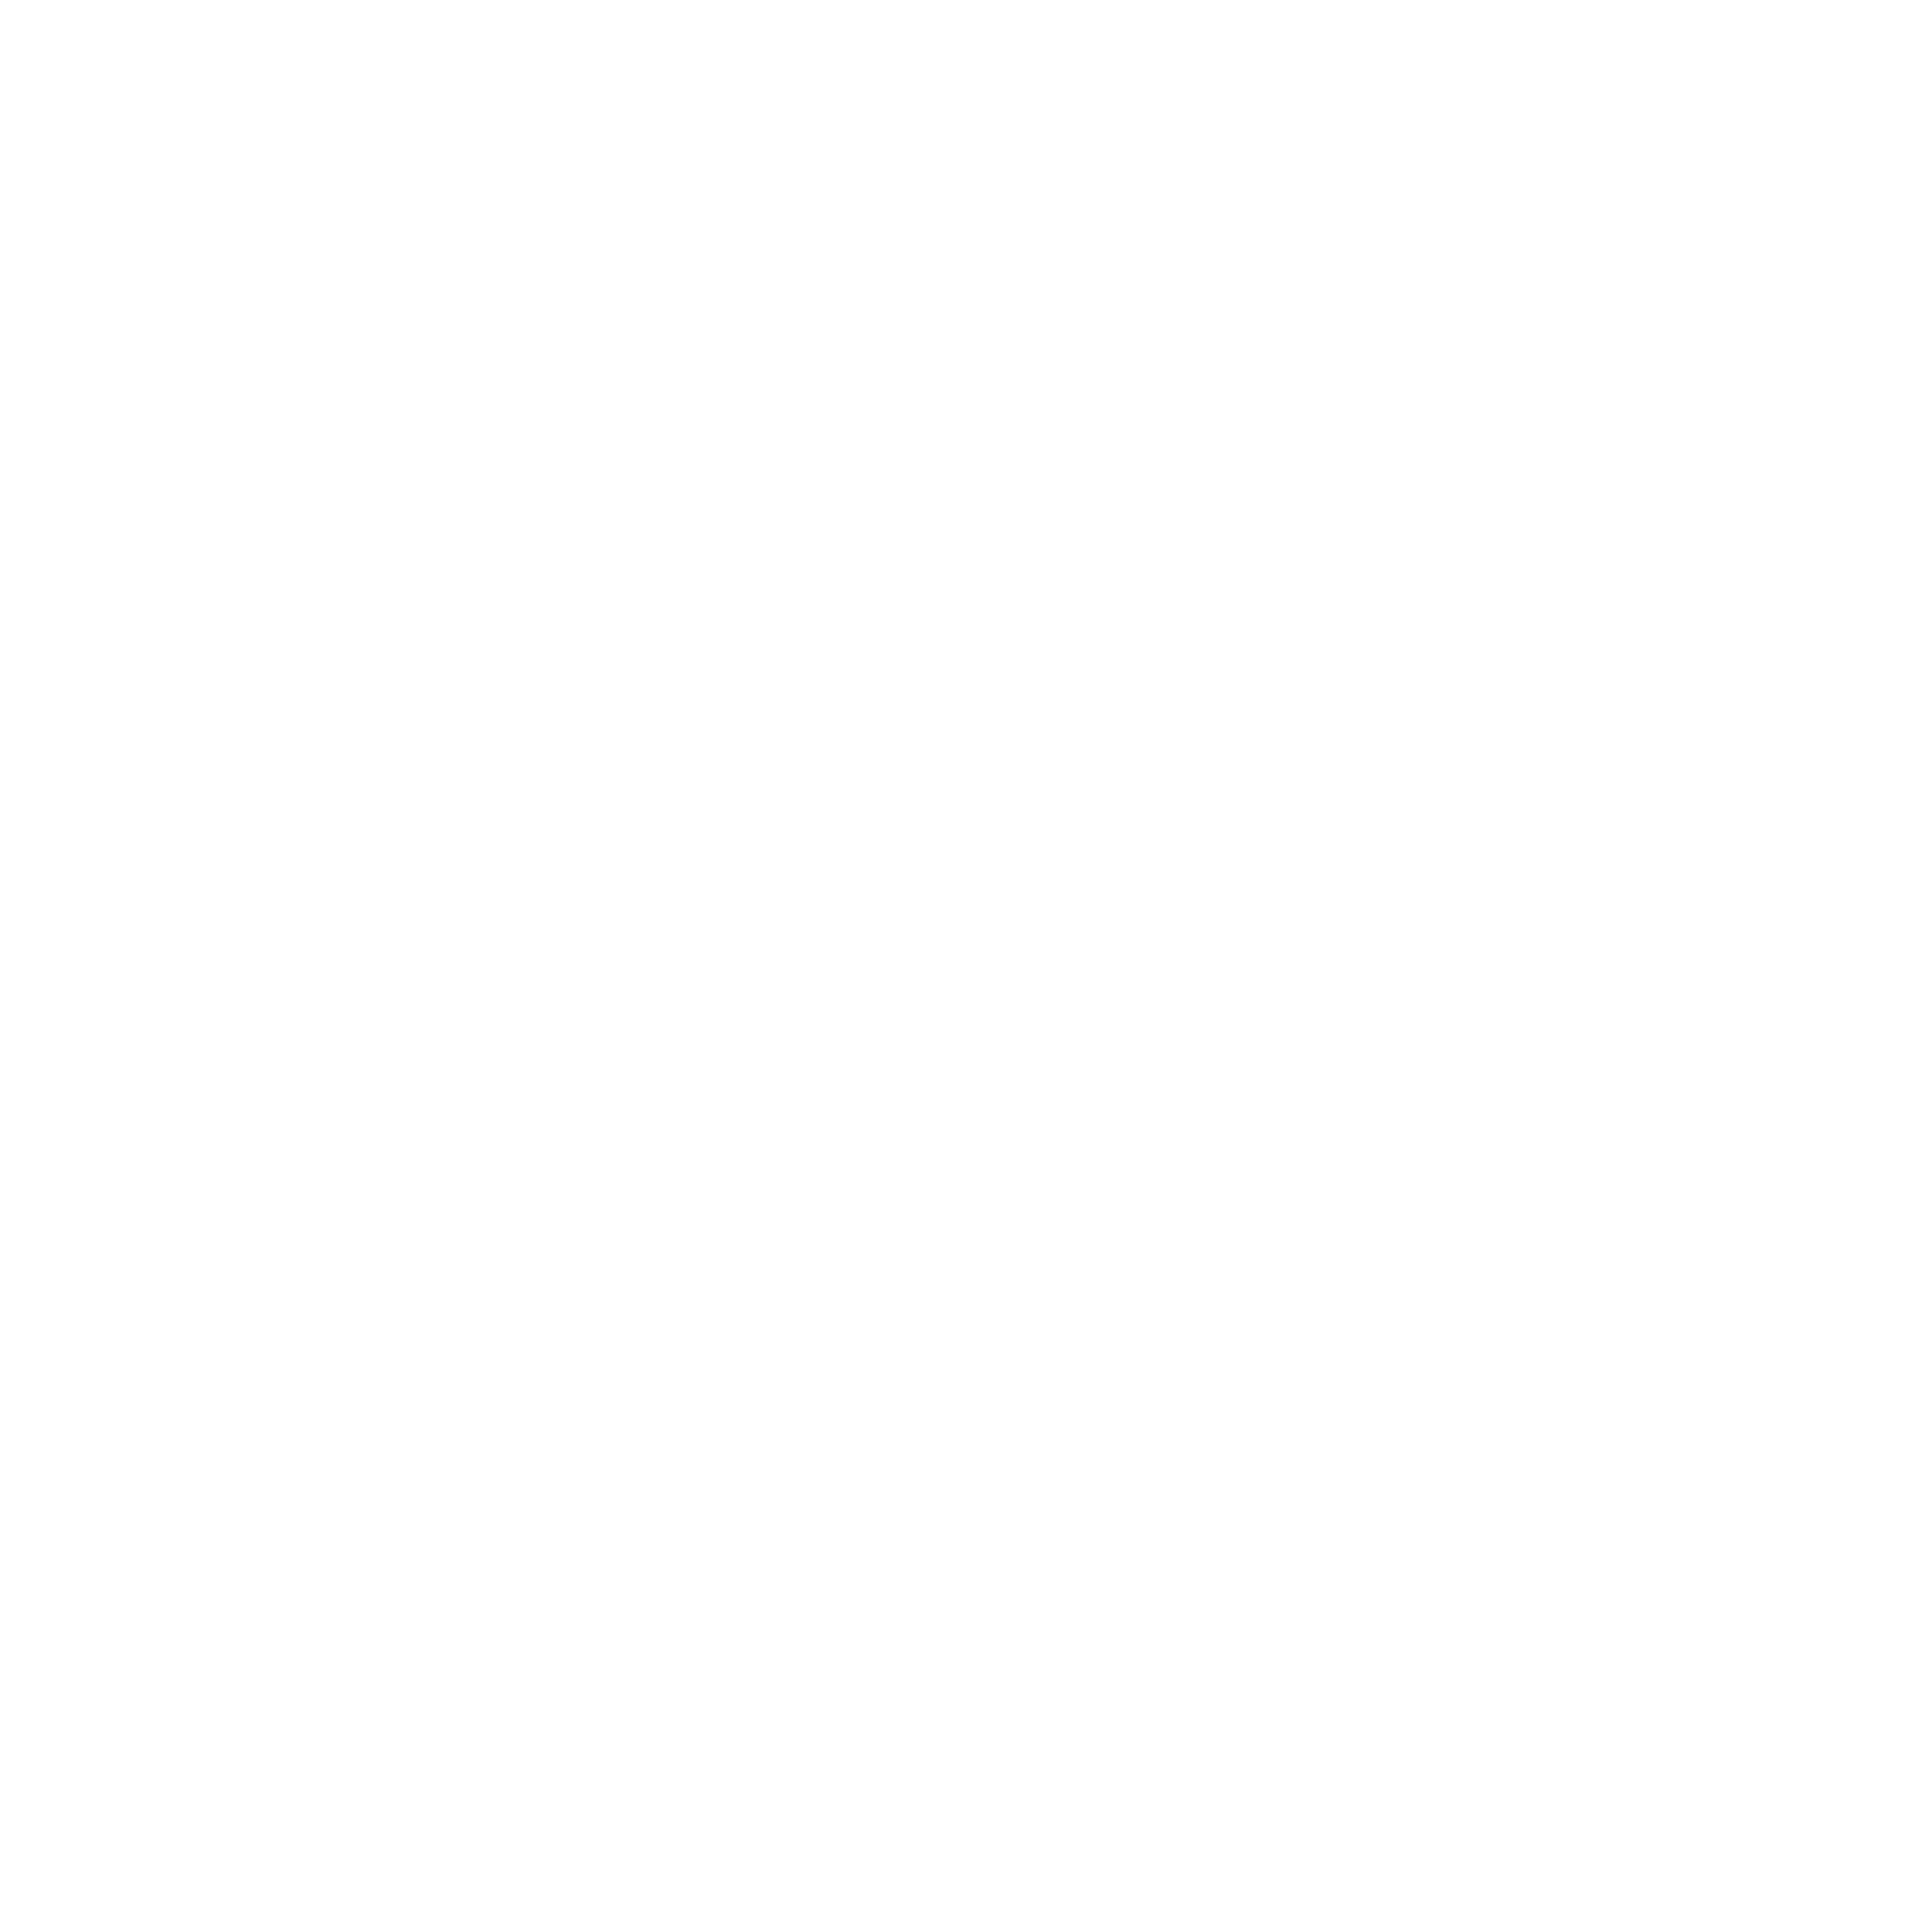 Stockholm Scool of Economics Executive Education